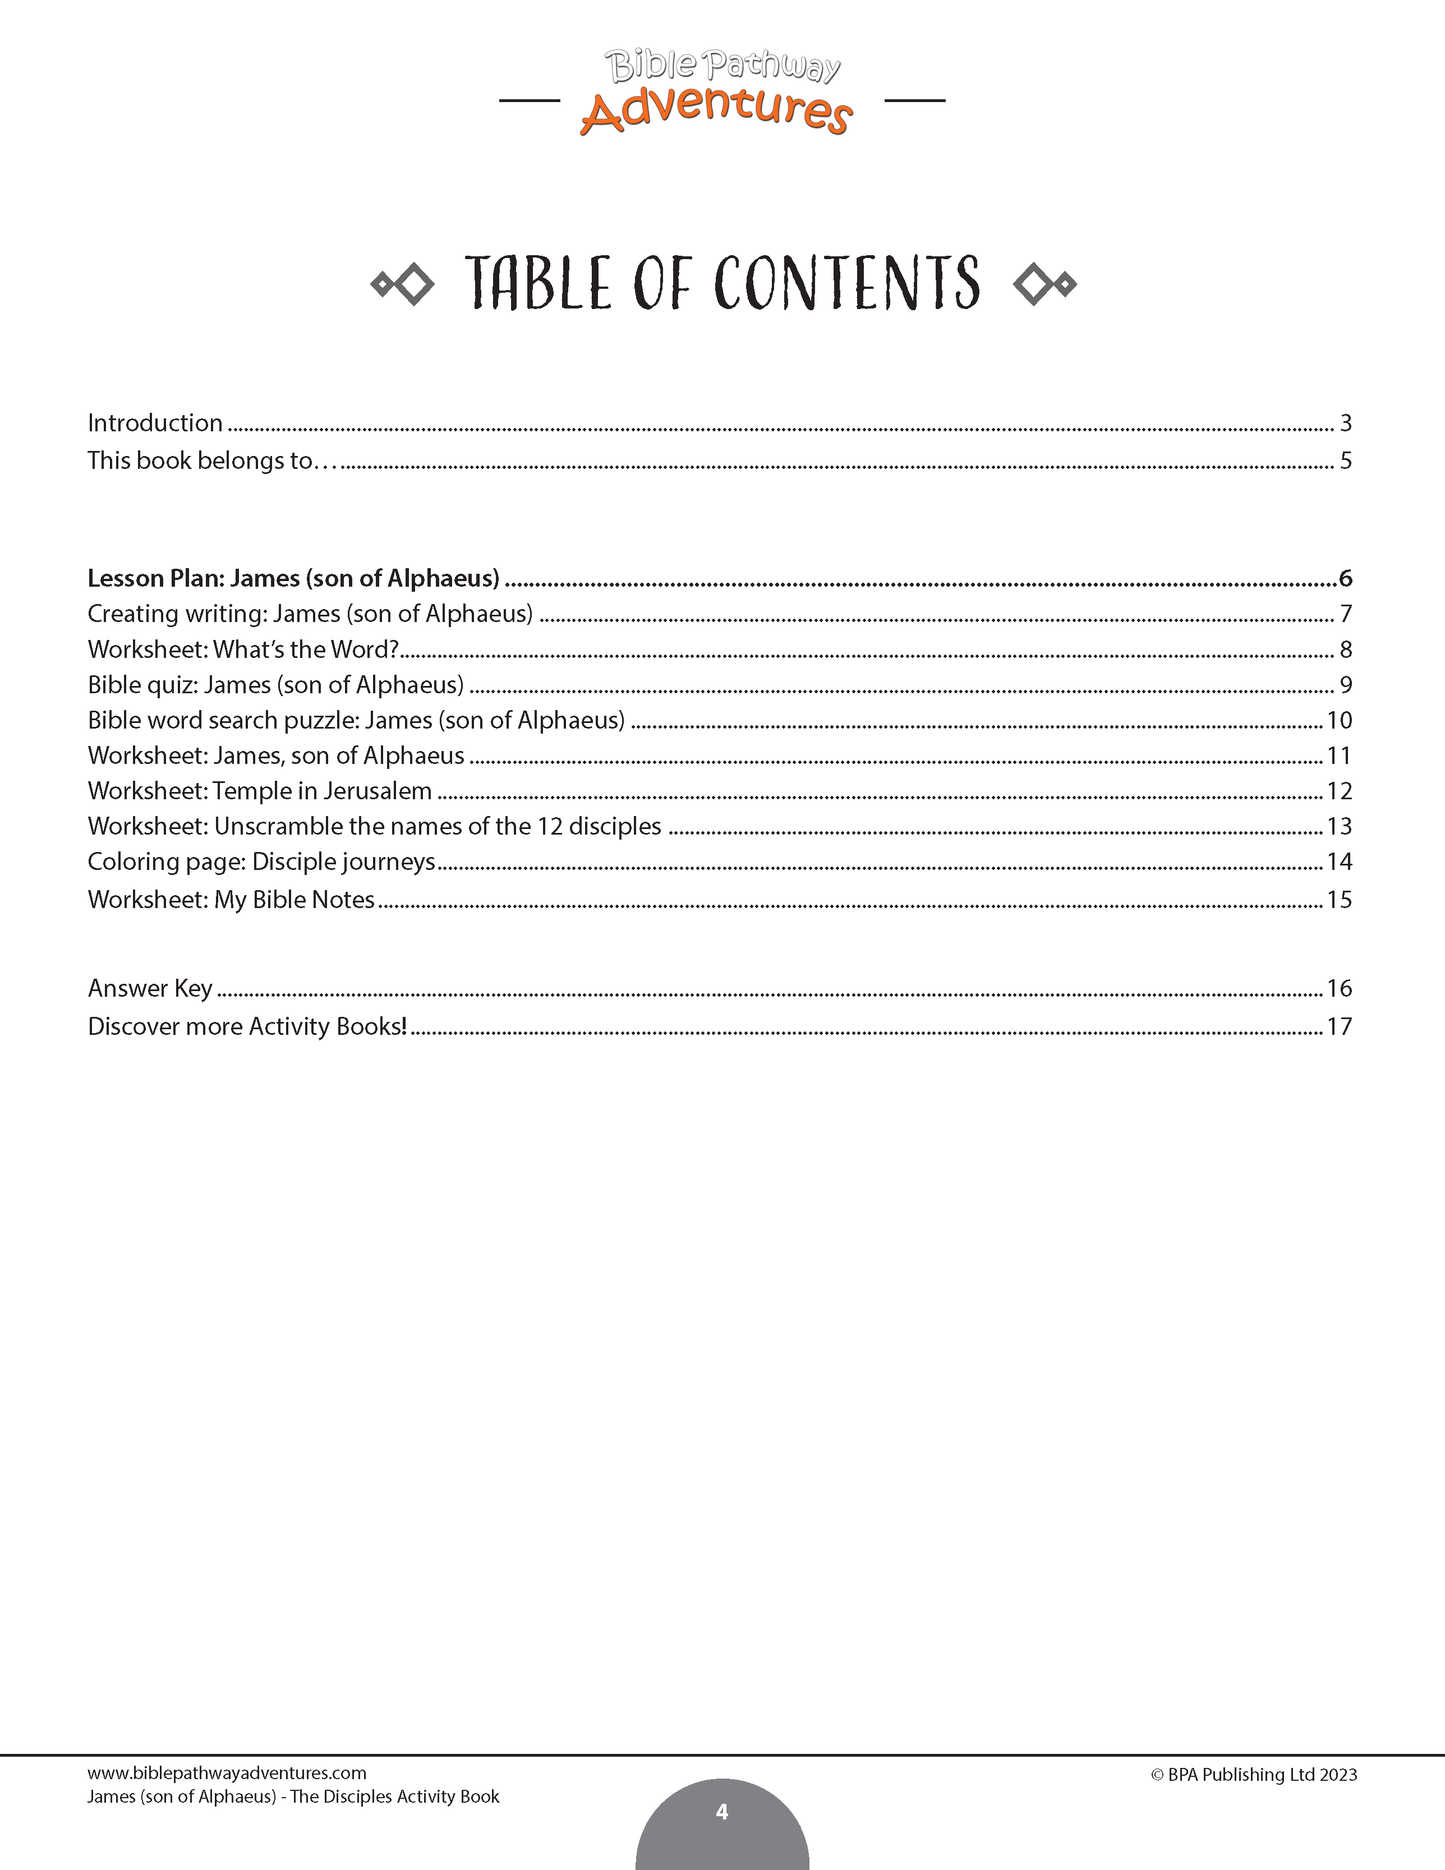 James (son of Alphaeus): The Disciple Activity Book (PDF)